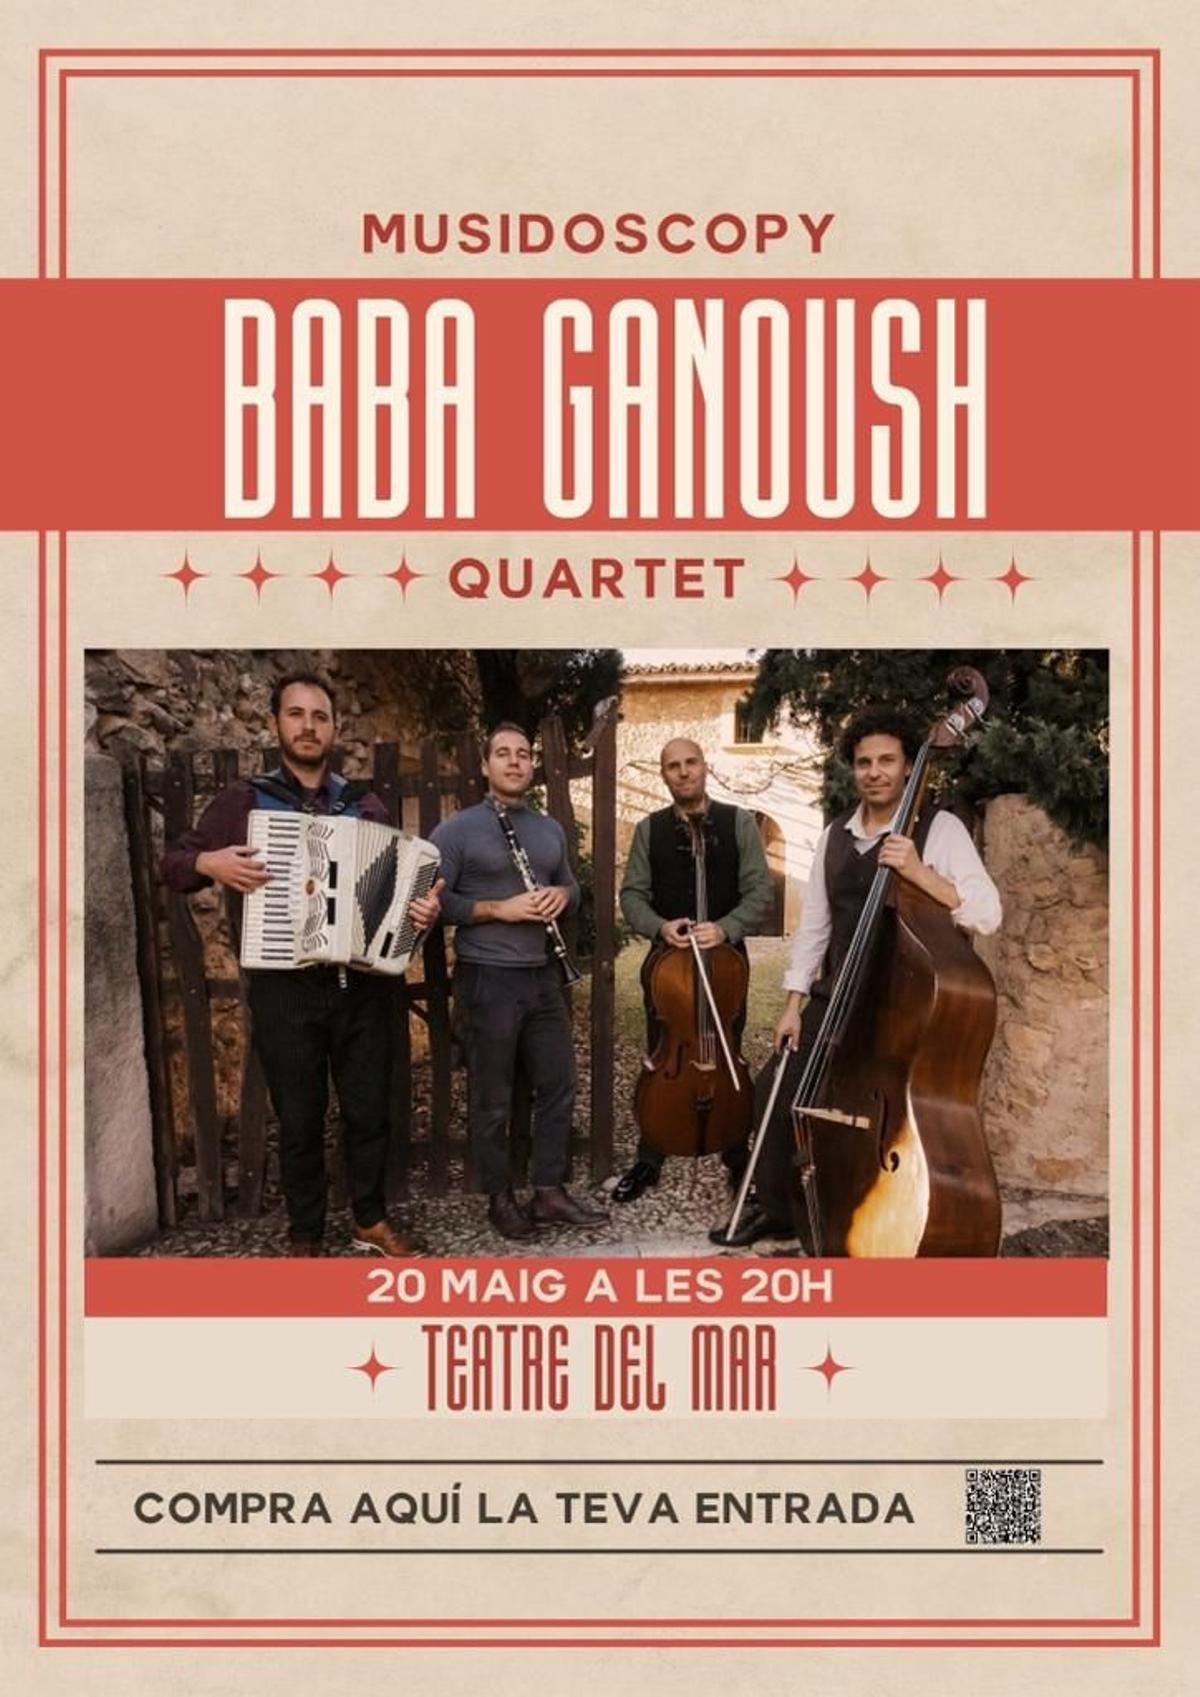 Baba Ganoush, grupo musical